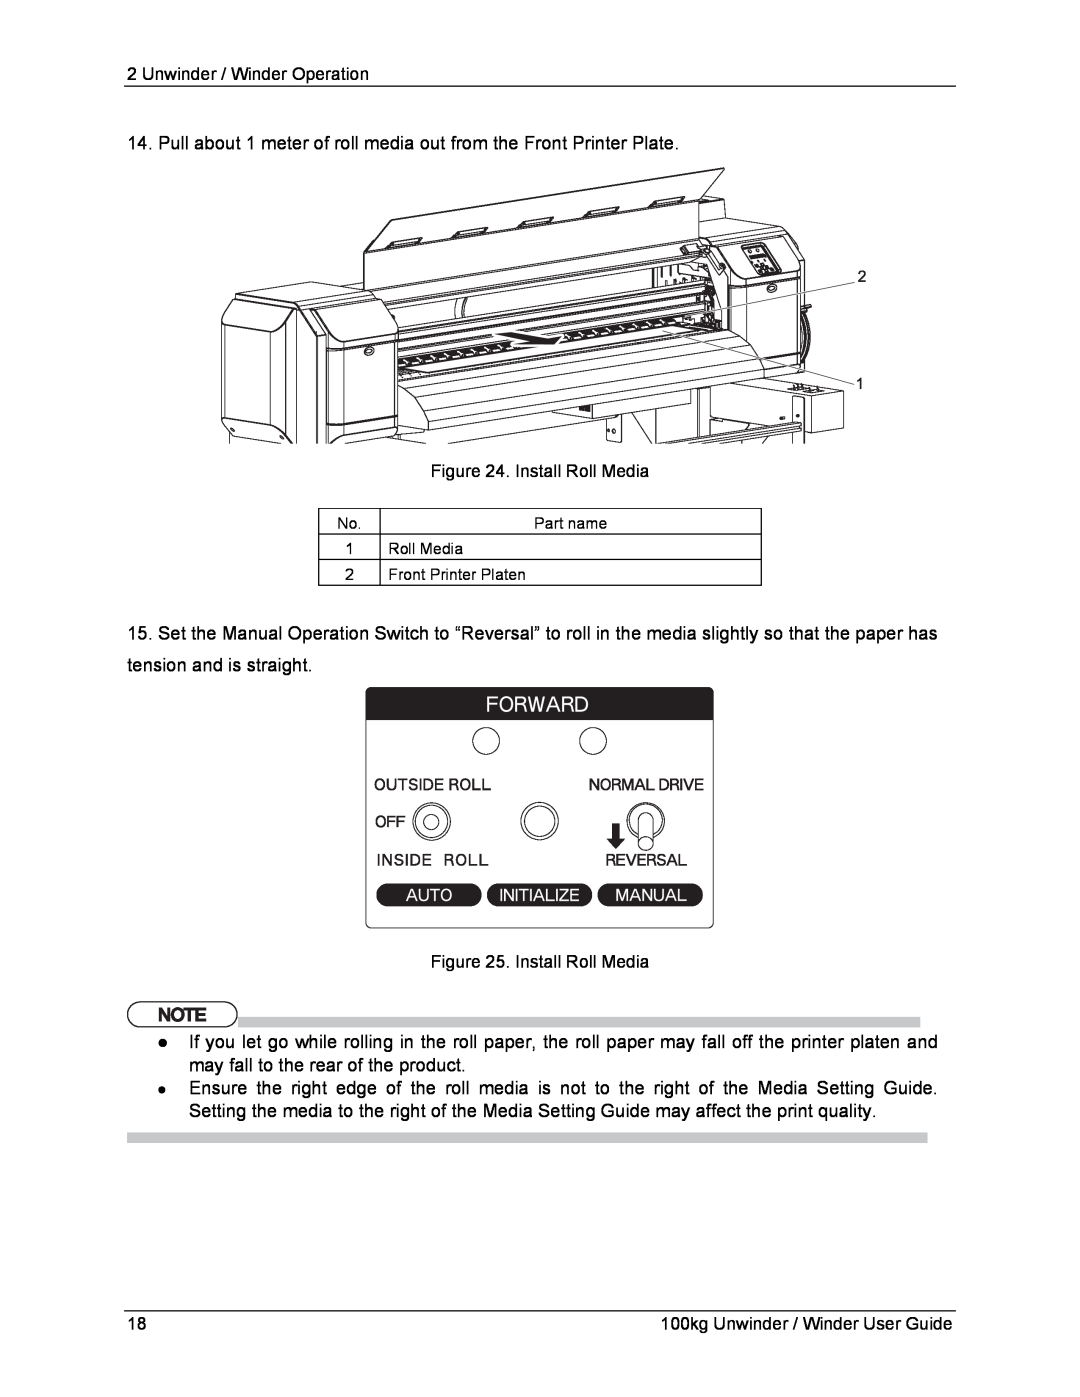 Xerox 8264E, 8254E manual Unwinder / Winder Operation, Install Roll Media, 100kg Unwinder / Winder User Guide 